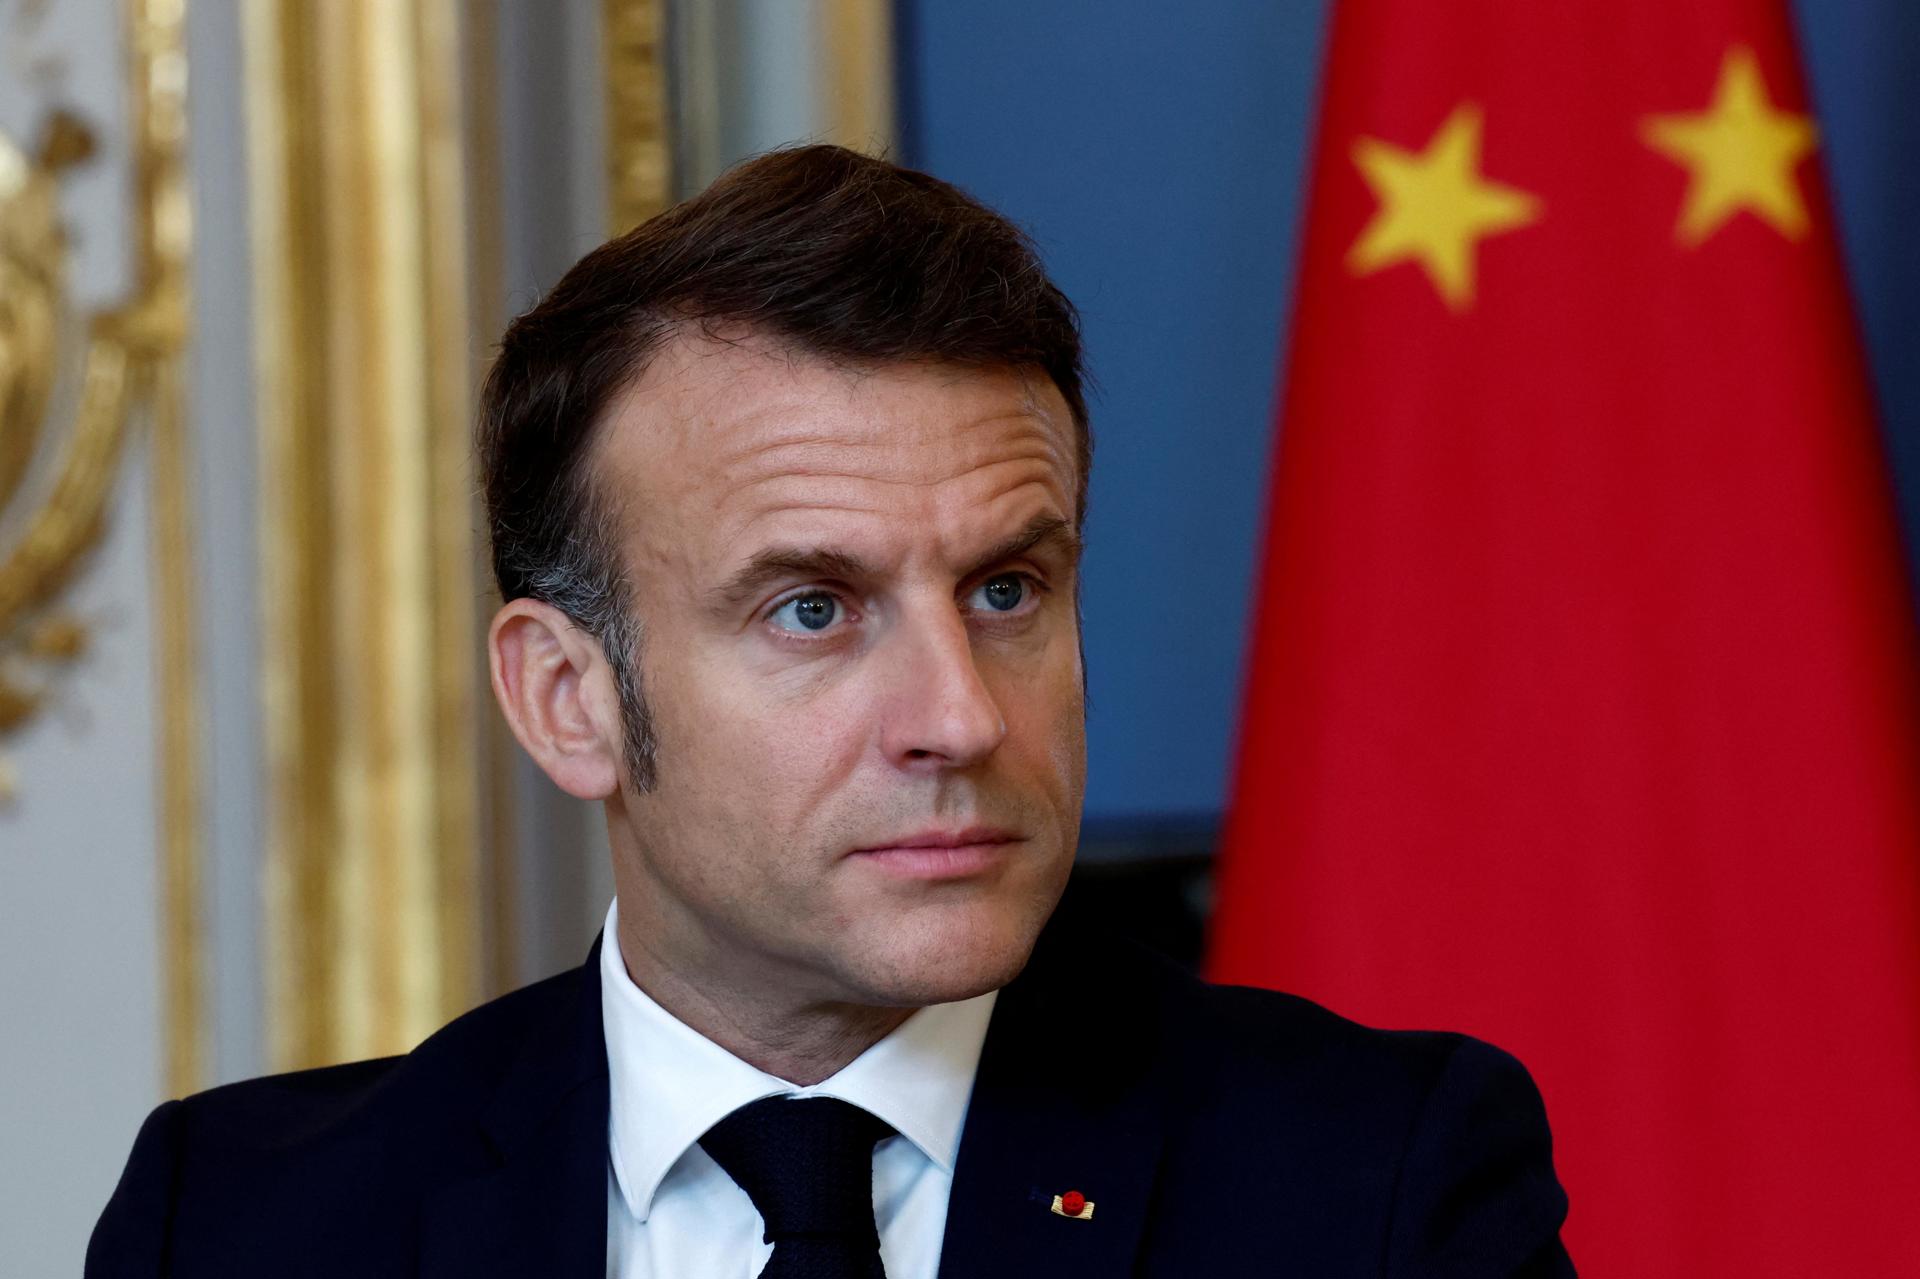 El presidente de Francia, Emmanuel Macron. EFE/EPA/GONZALO FUENTES / POOL MAXPPP OUT
